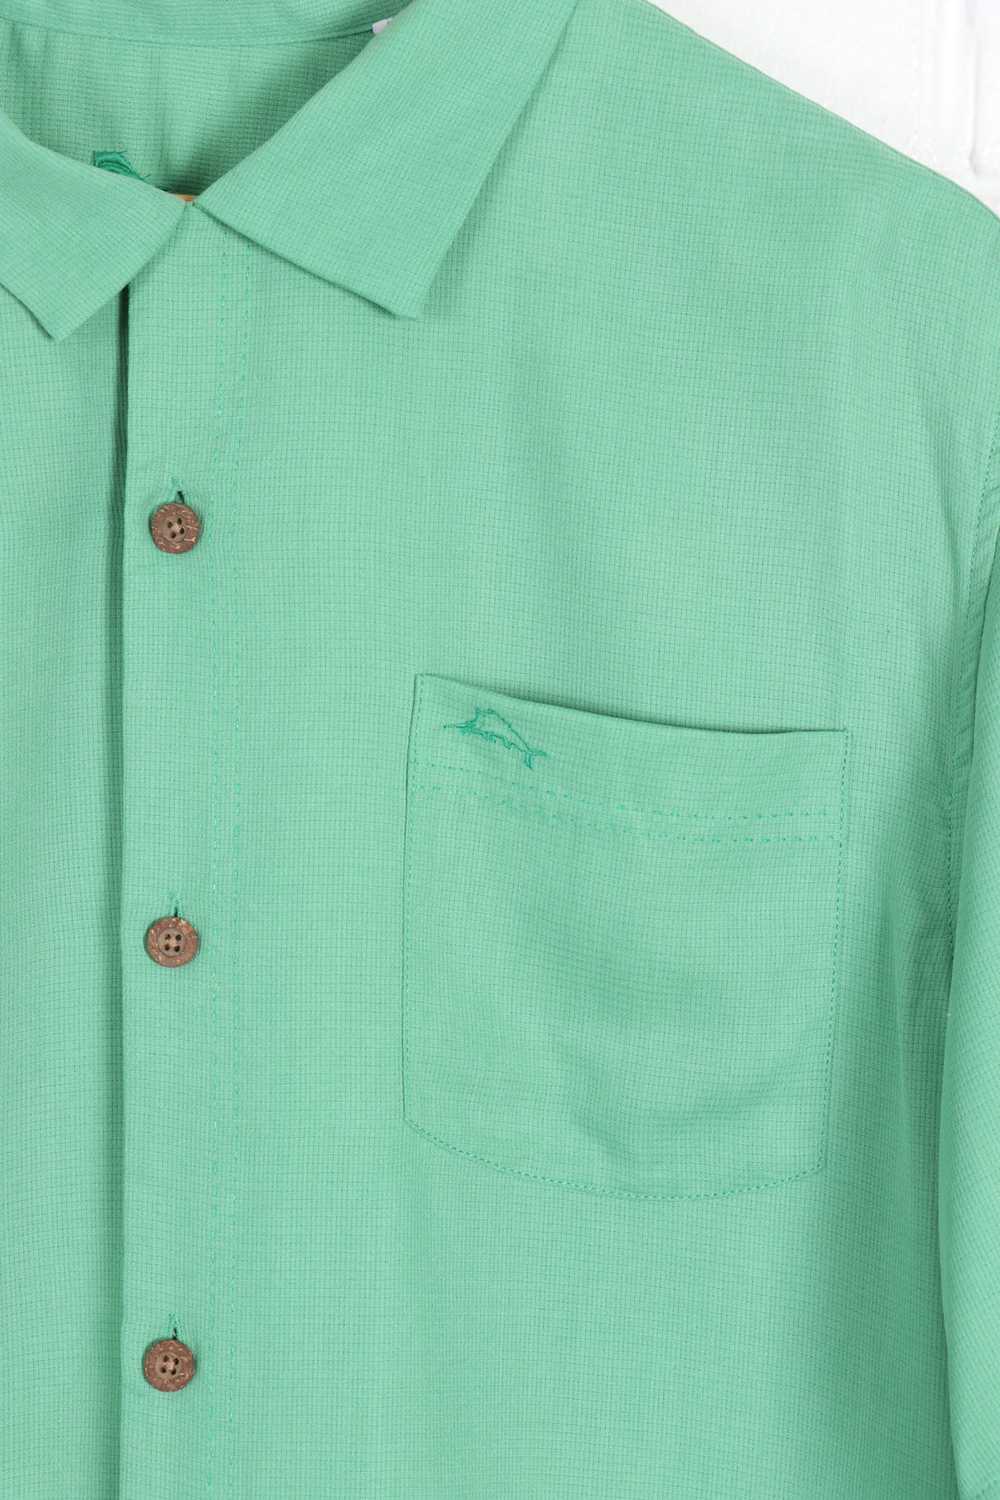 TOMMY BAHAMA Green Silk Short Sleeve Shirt (XL) - image 2